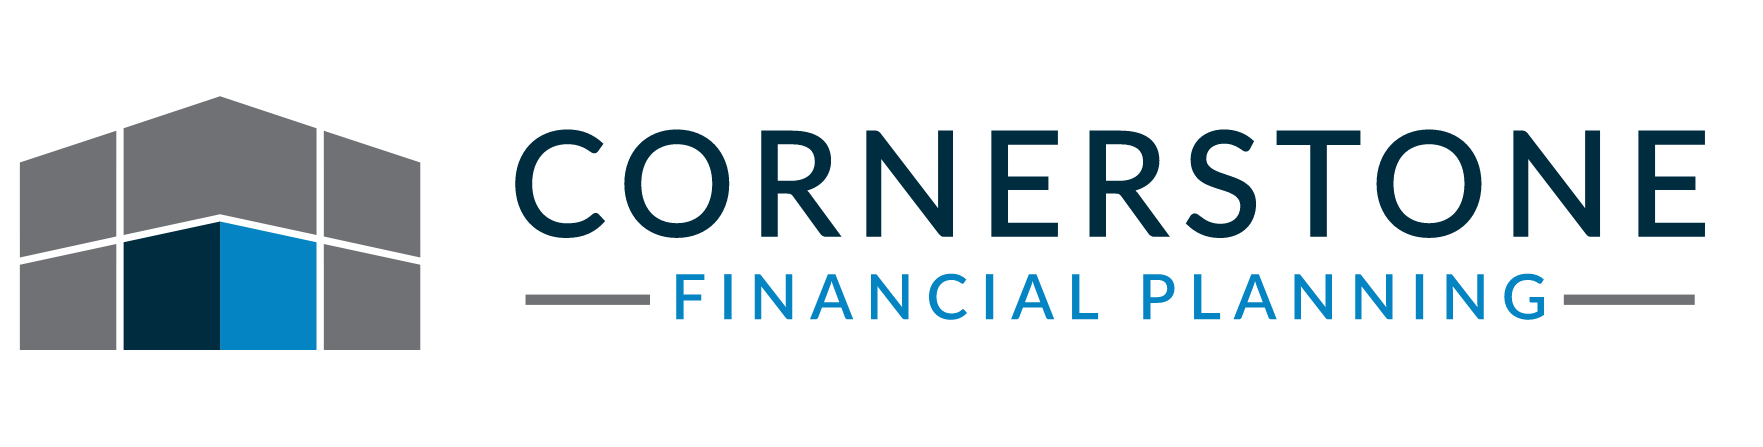 Cornerstone Financial Planning